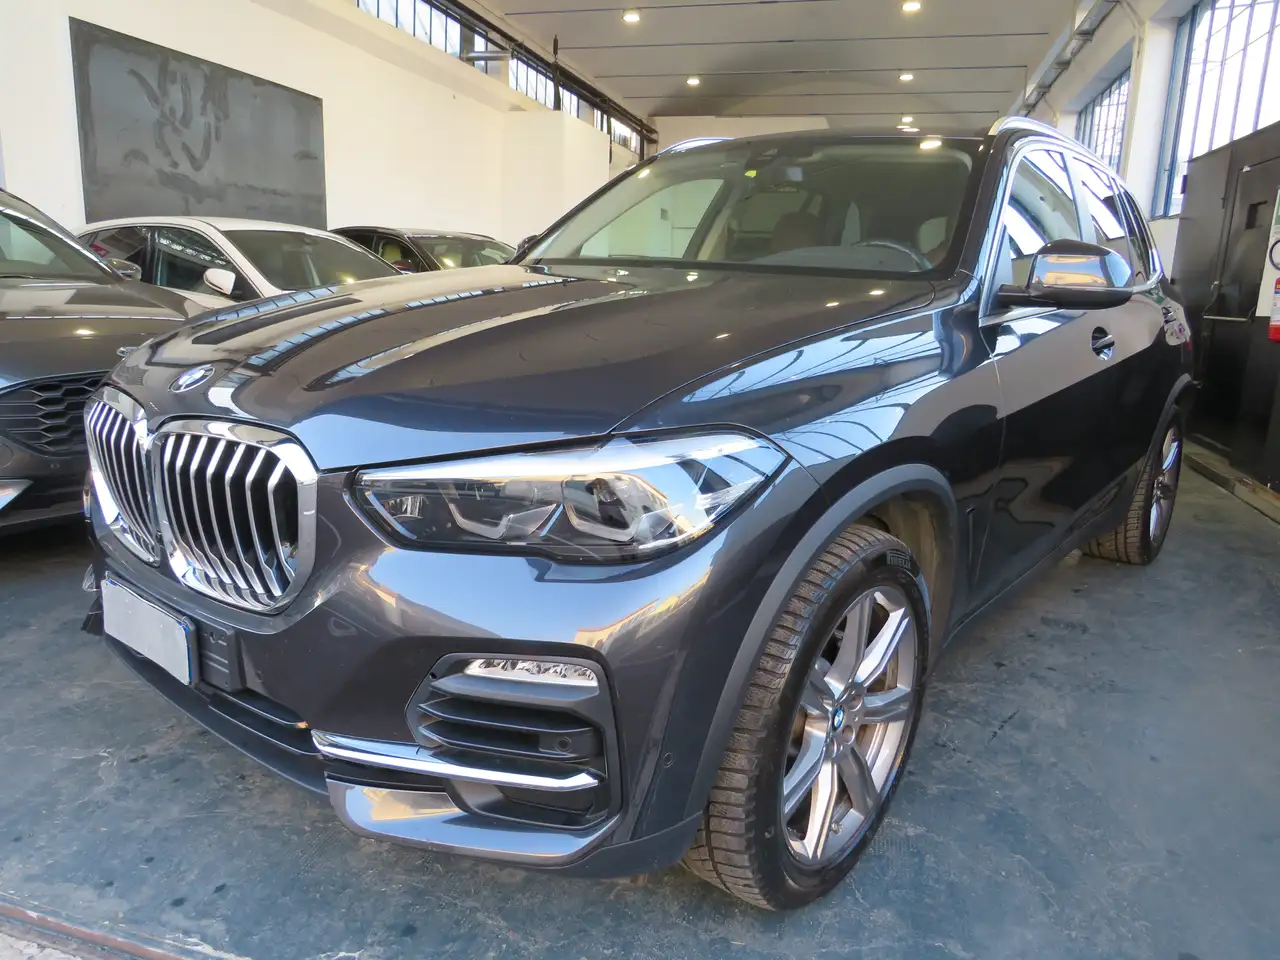 2019 - BMW X5 X5 Boîte automatique SUV